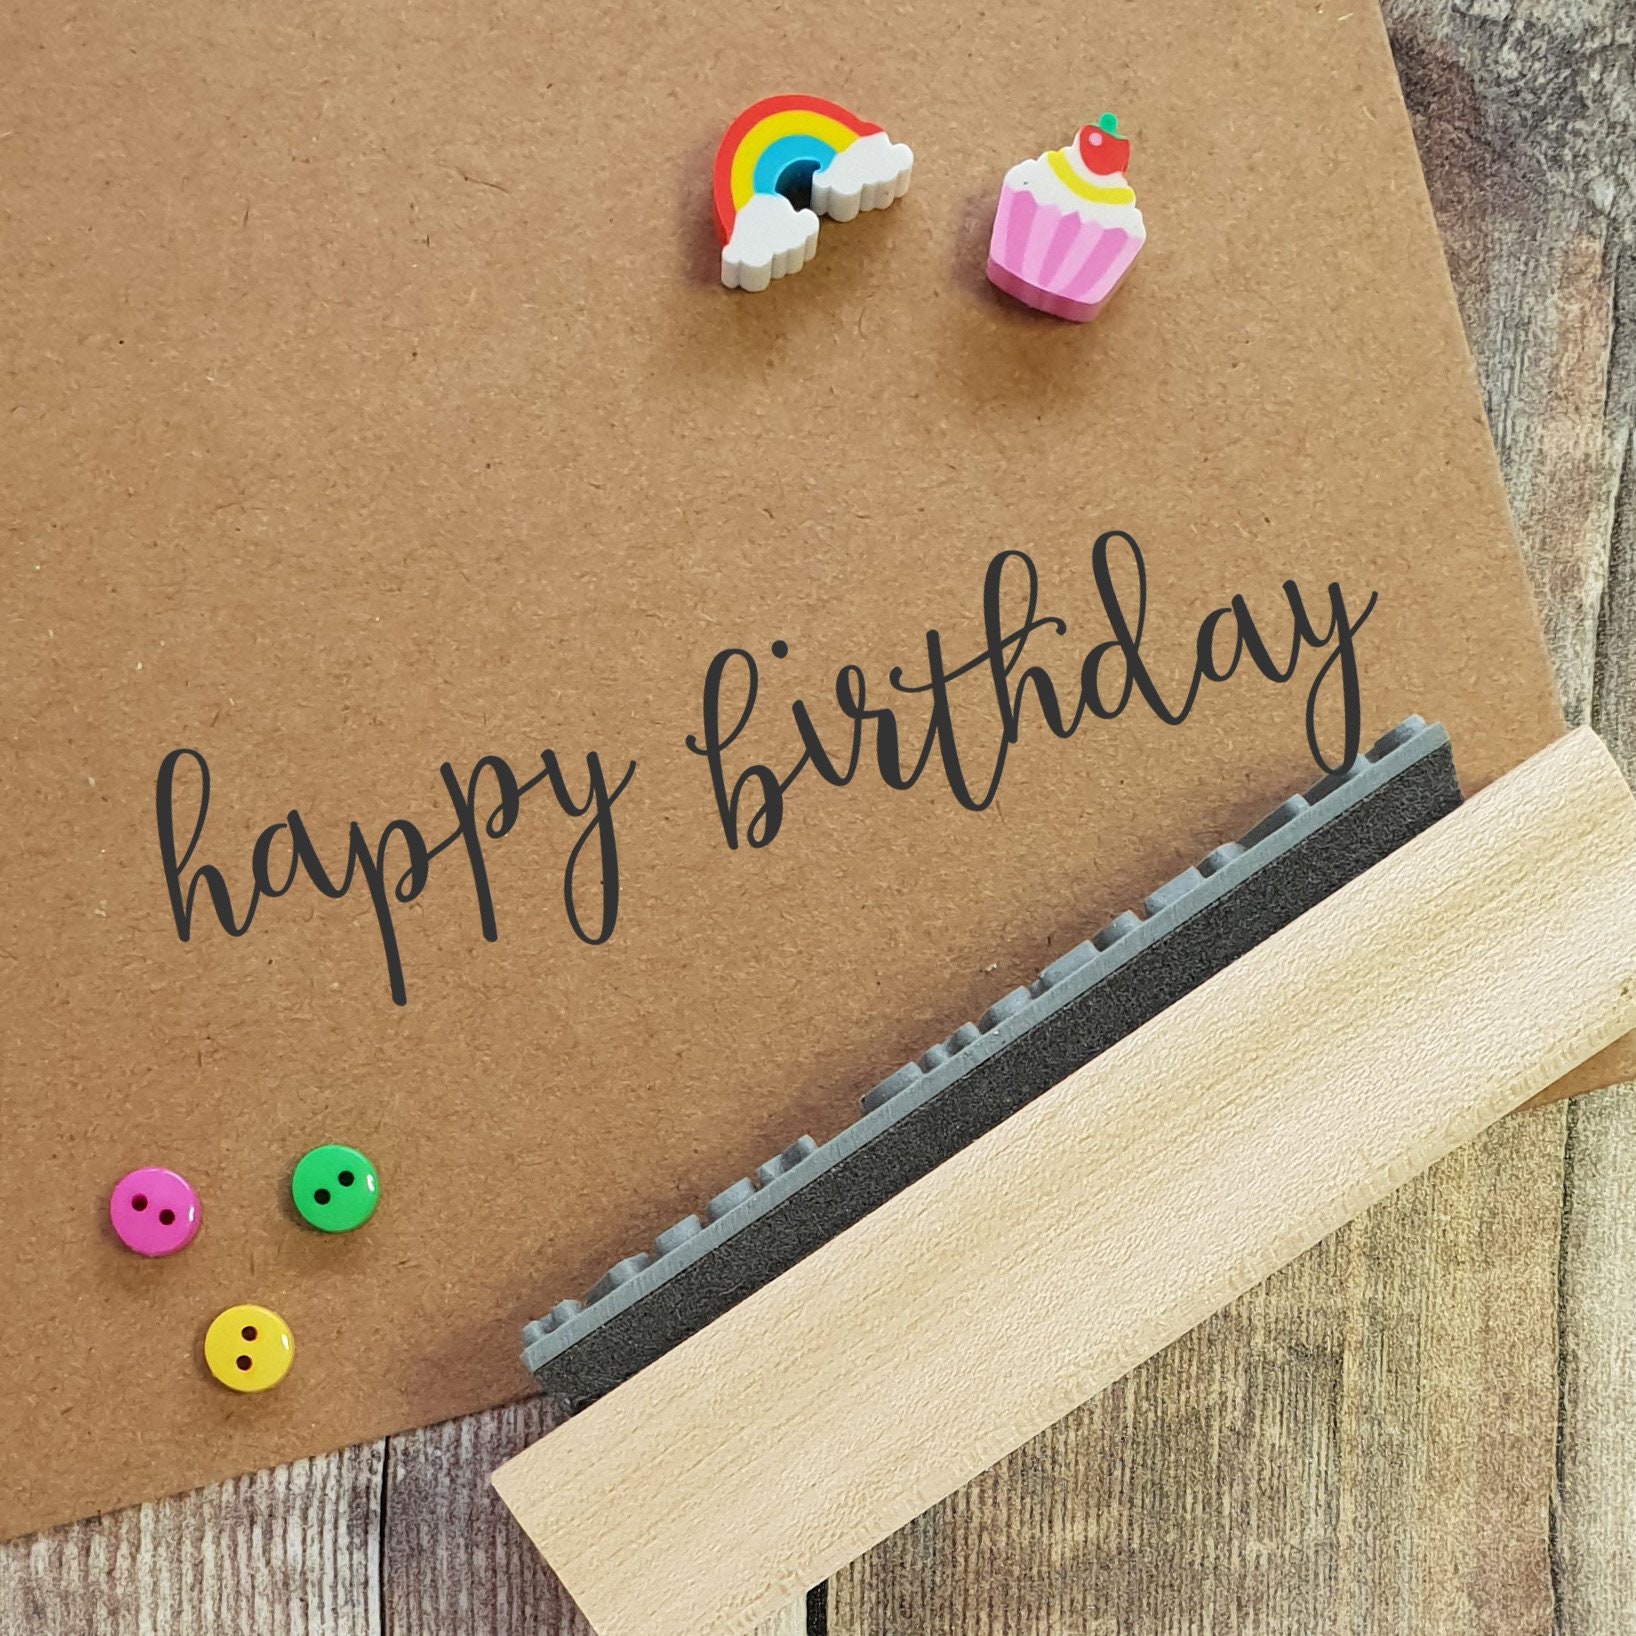 Happy Birthday Grunge Stamp Stock Illustration - Download Image